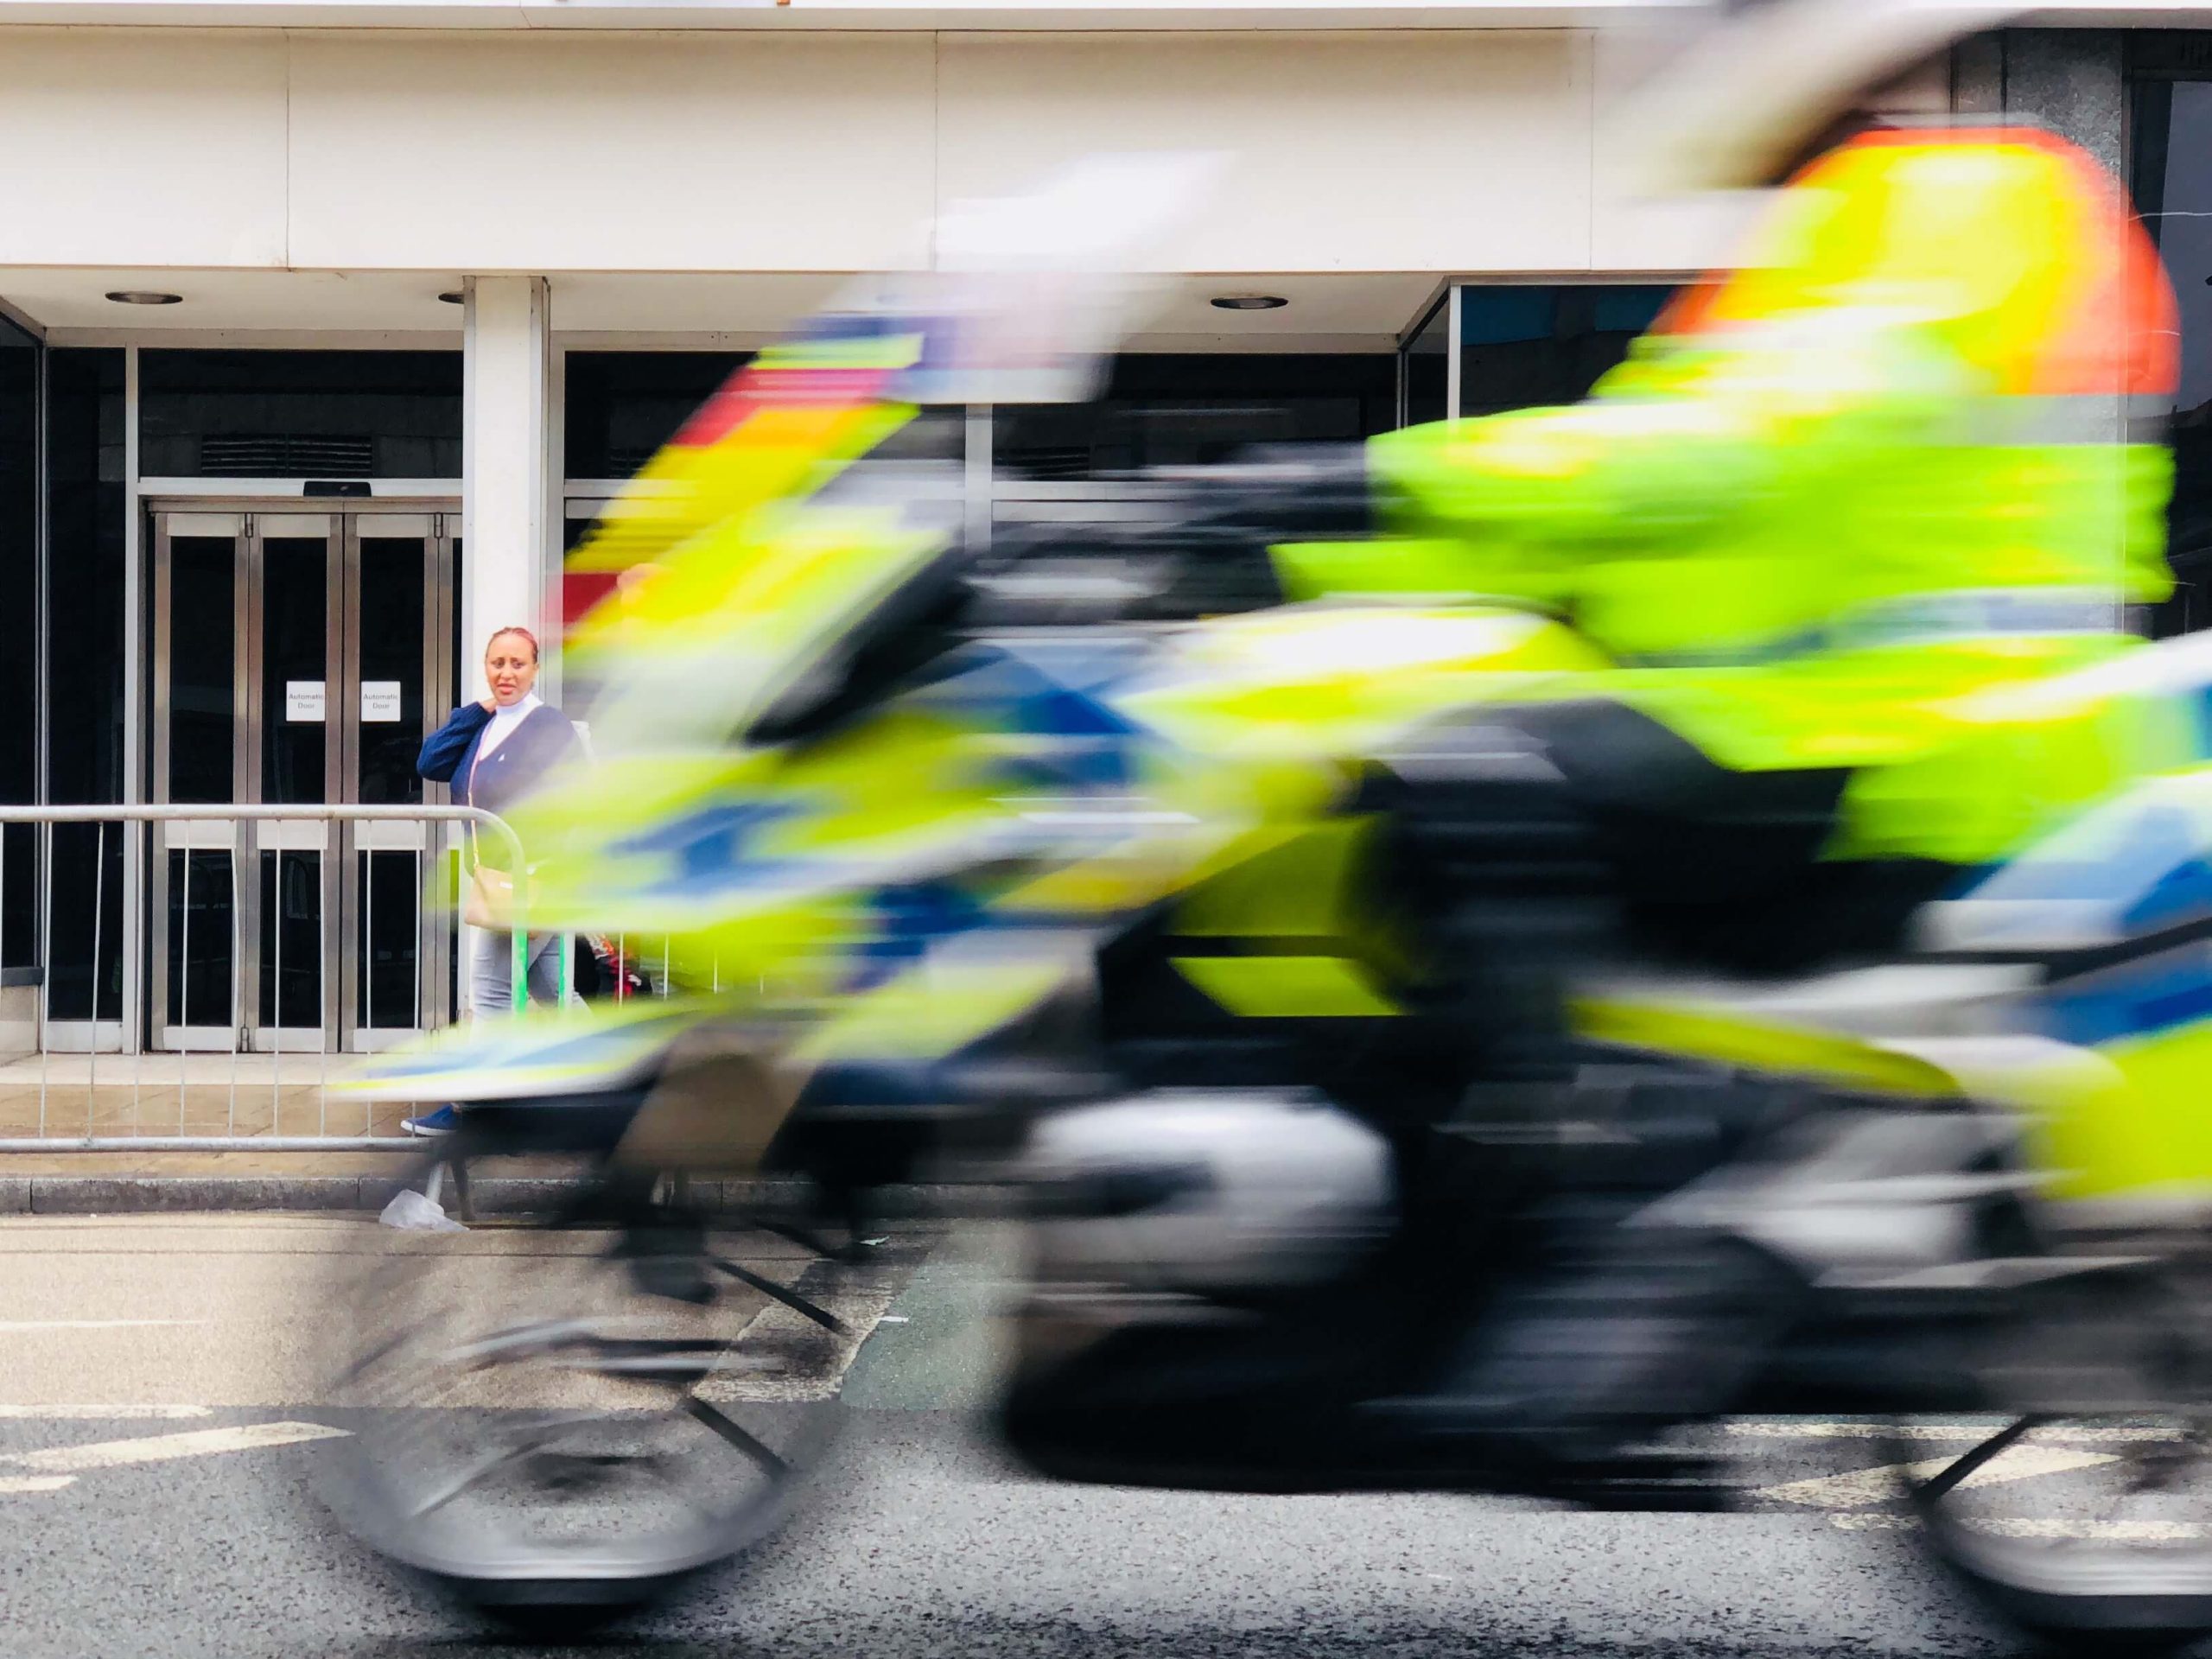 UK Emergency services motorcycle outside a UK hospital